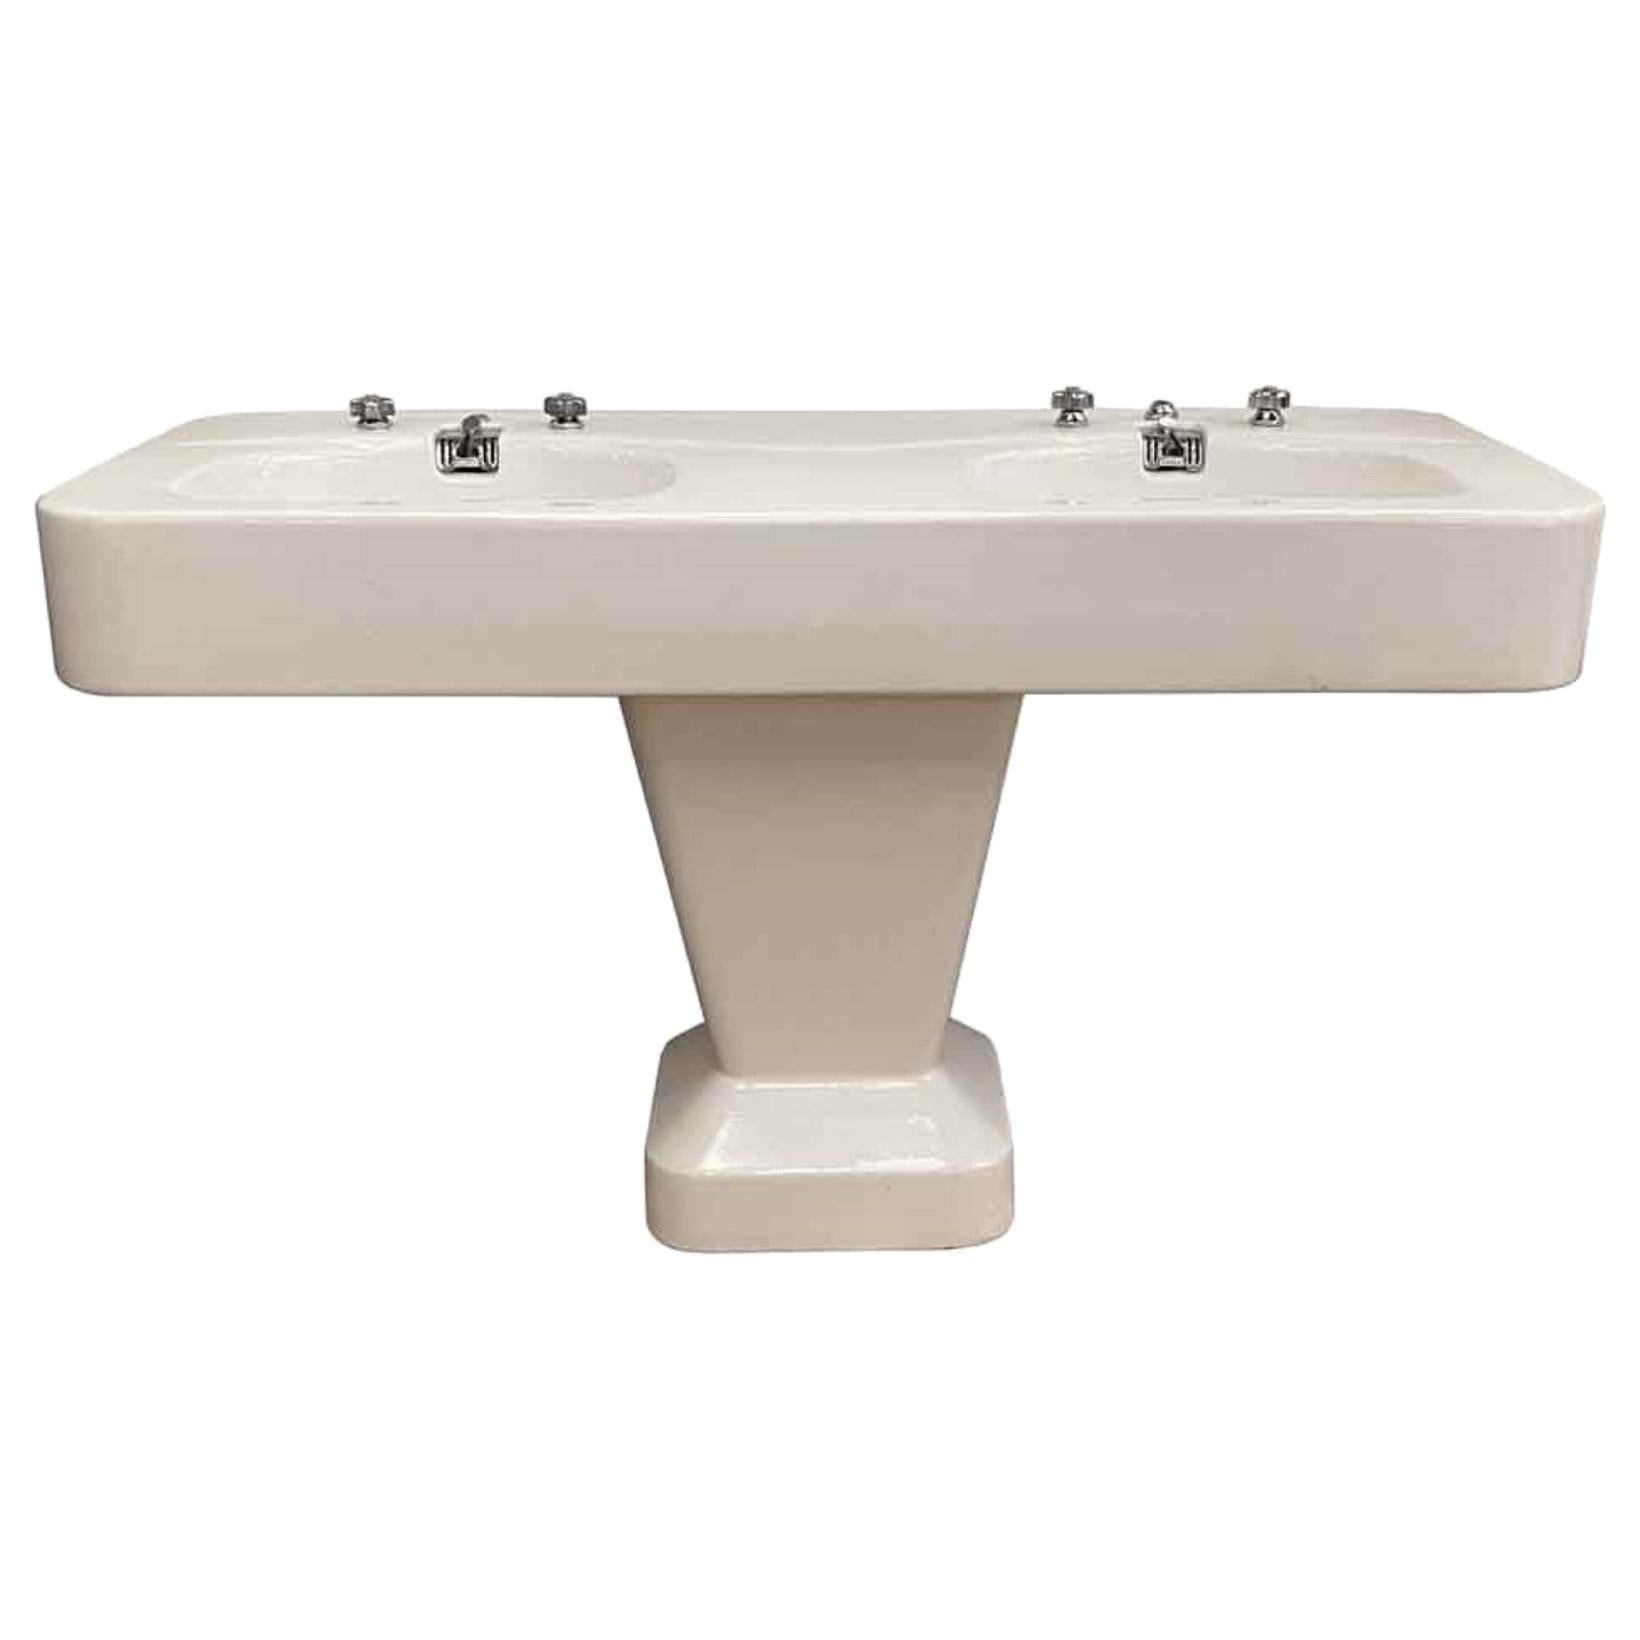 1930s French Art Deco Double Basin White Pedestal Sink